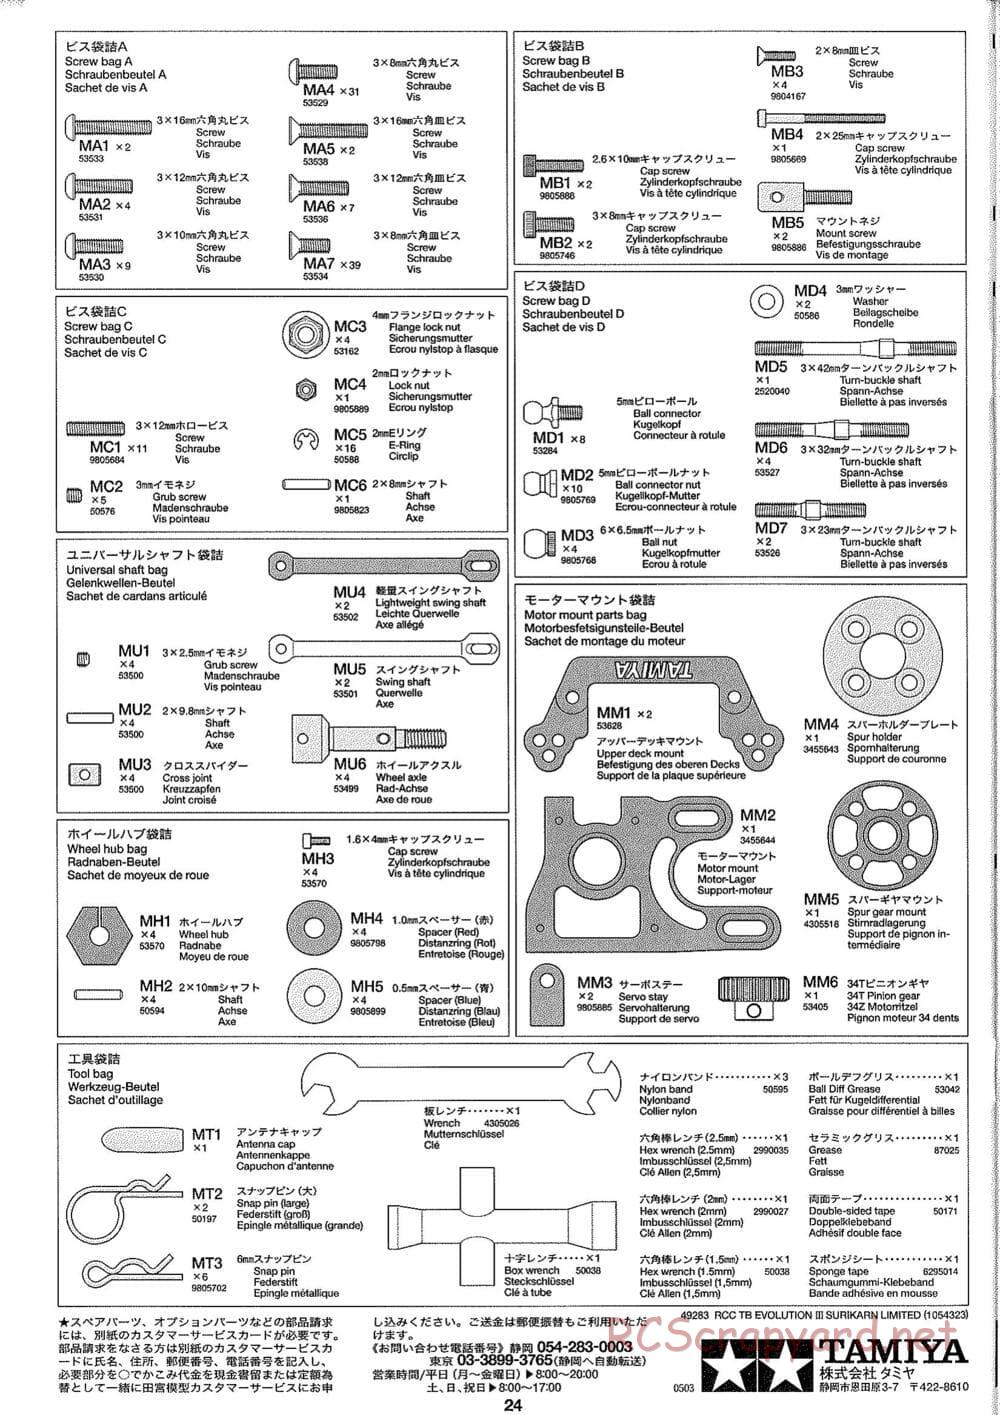 Tamiya - TB Evolution III Surikarn Limited Chassis - Manual - Page 24